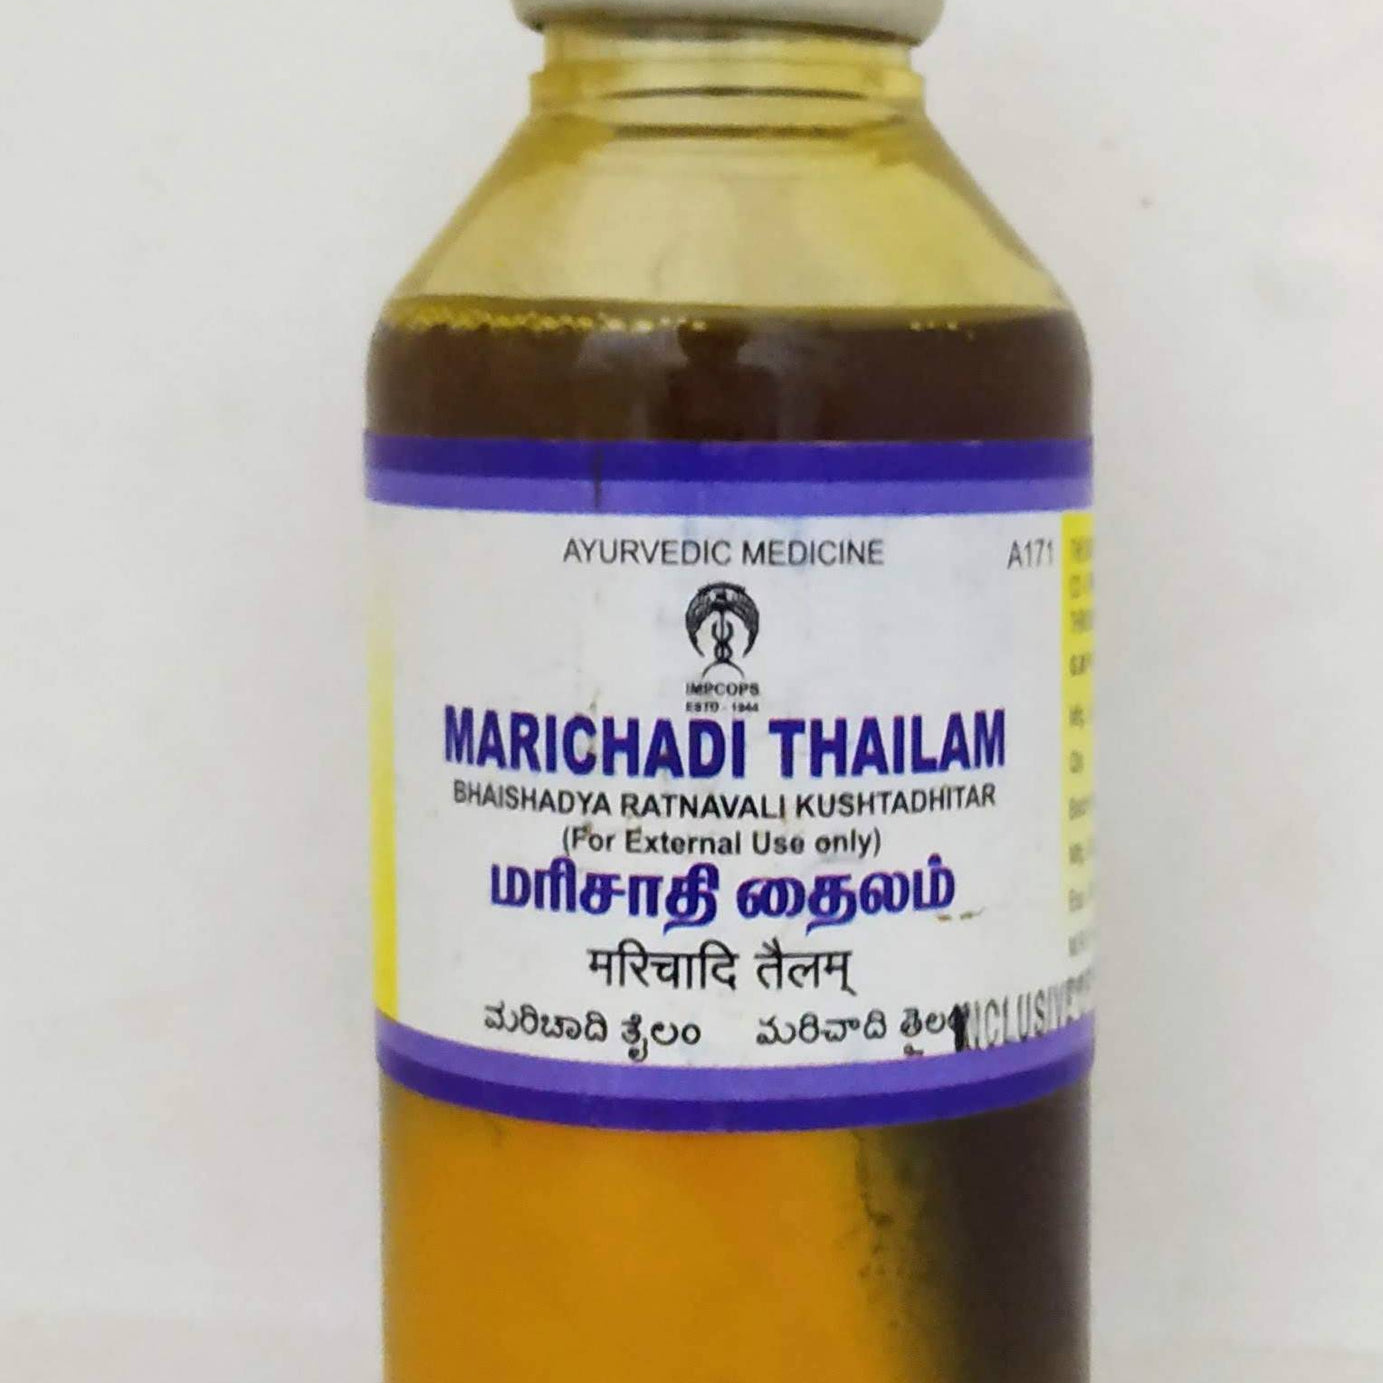 Shop Marichadi Thailam 100ml at price 169.00 from Impcops Online - Ayush Care